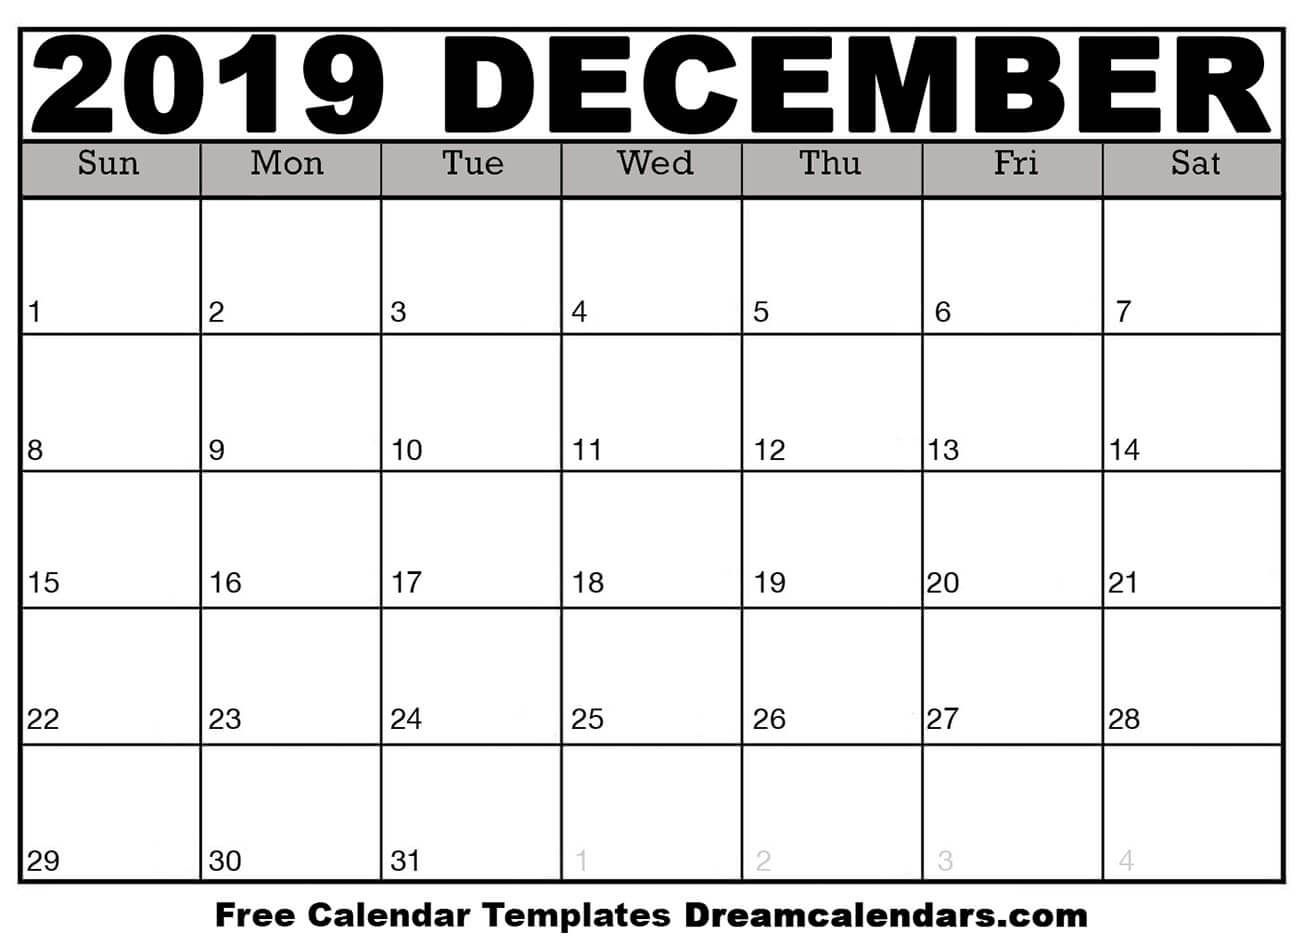 December 2019 Calendar | Free Blank Printable Templates